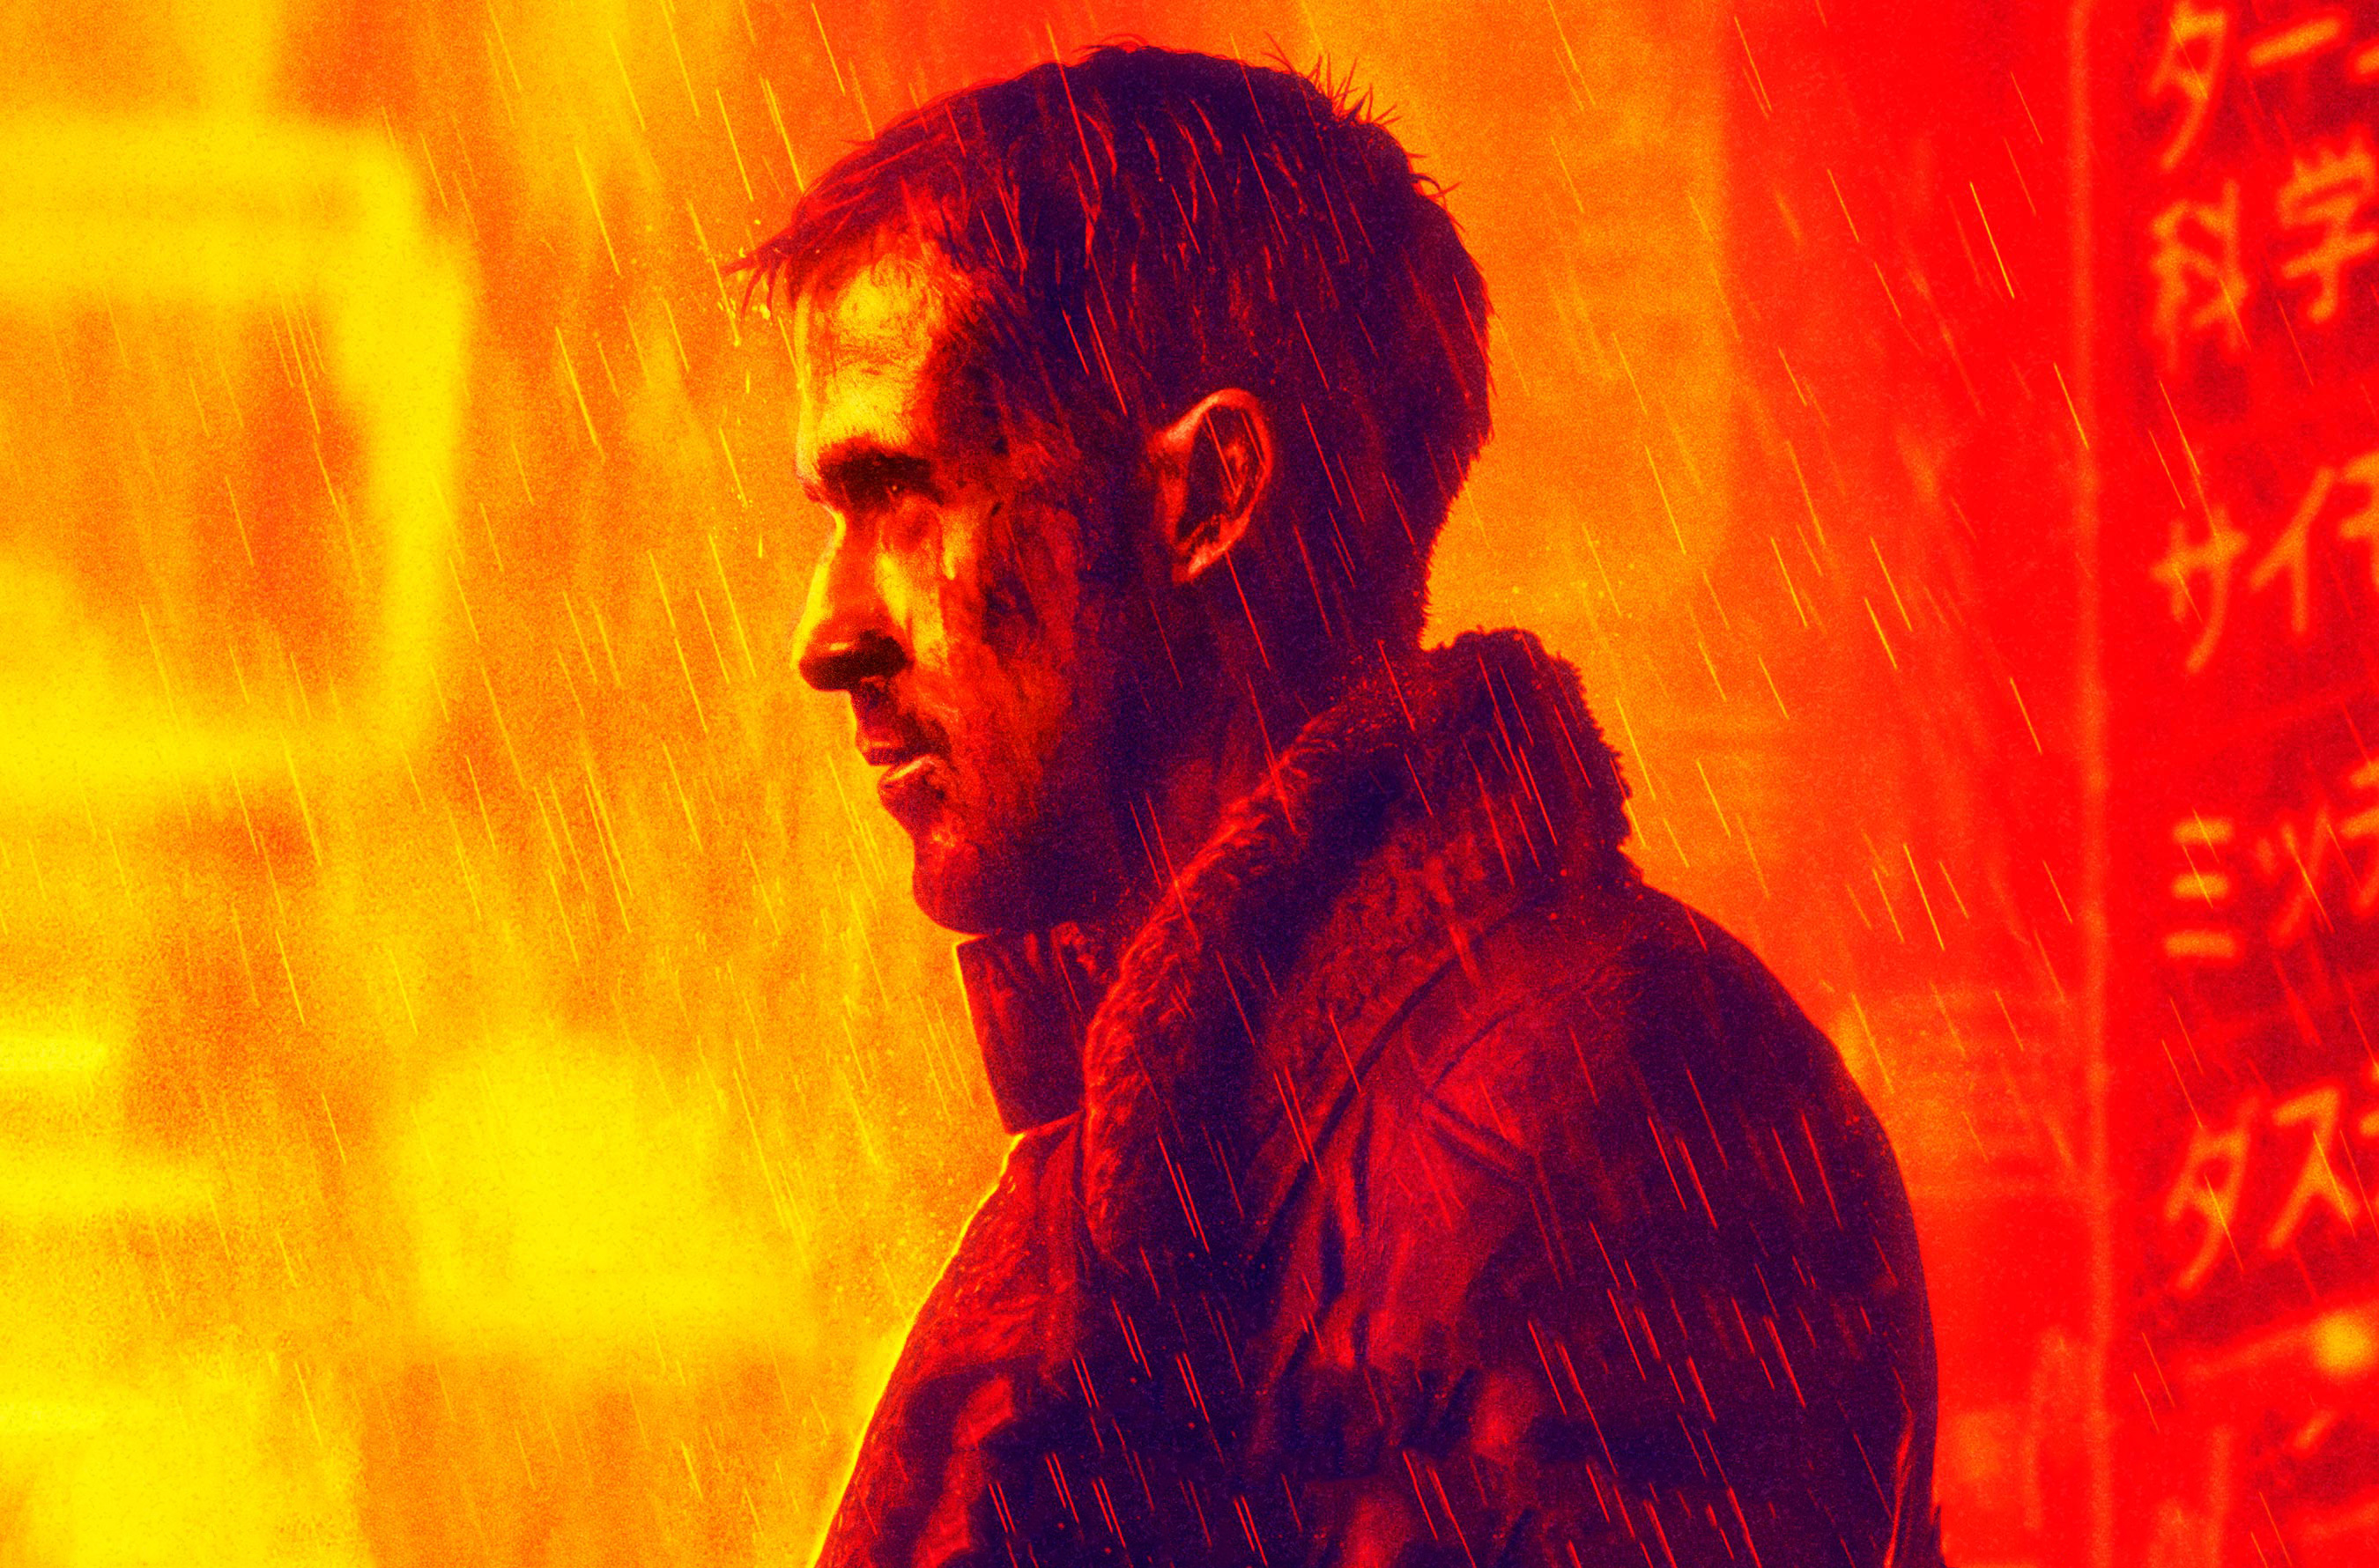 Ryan Gosling Blade Runner 2049 Am1sbGuUmZqaraWkpJRnbGVlrWZsbWU 